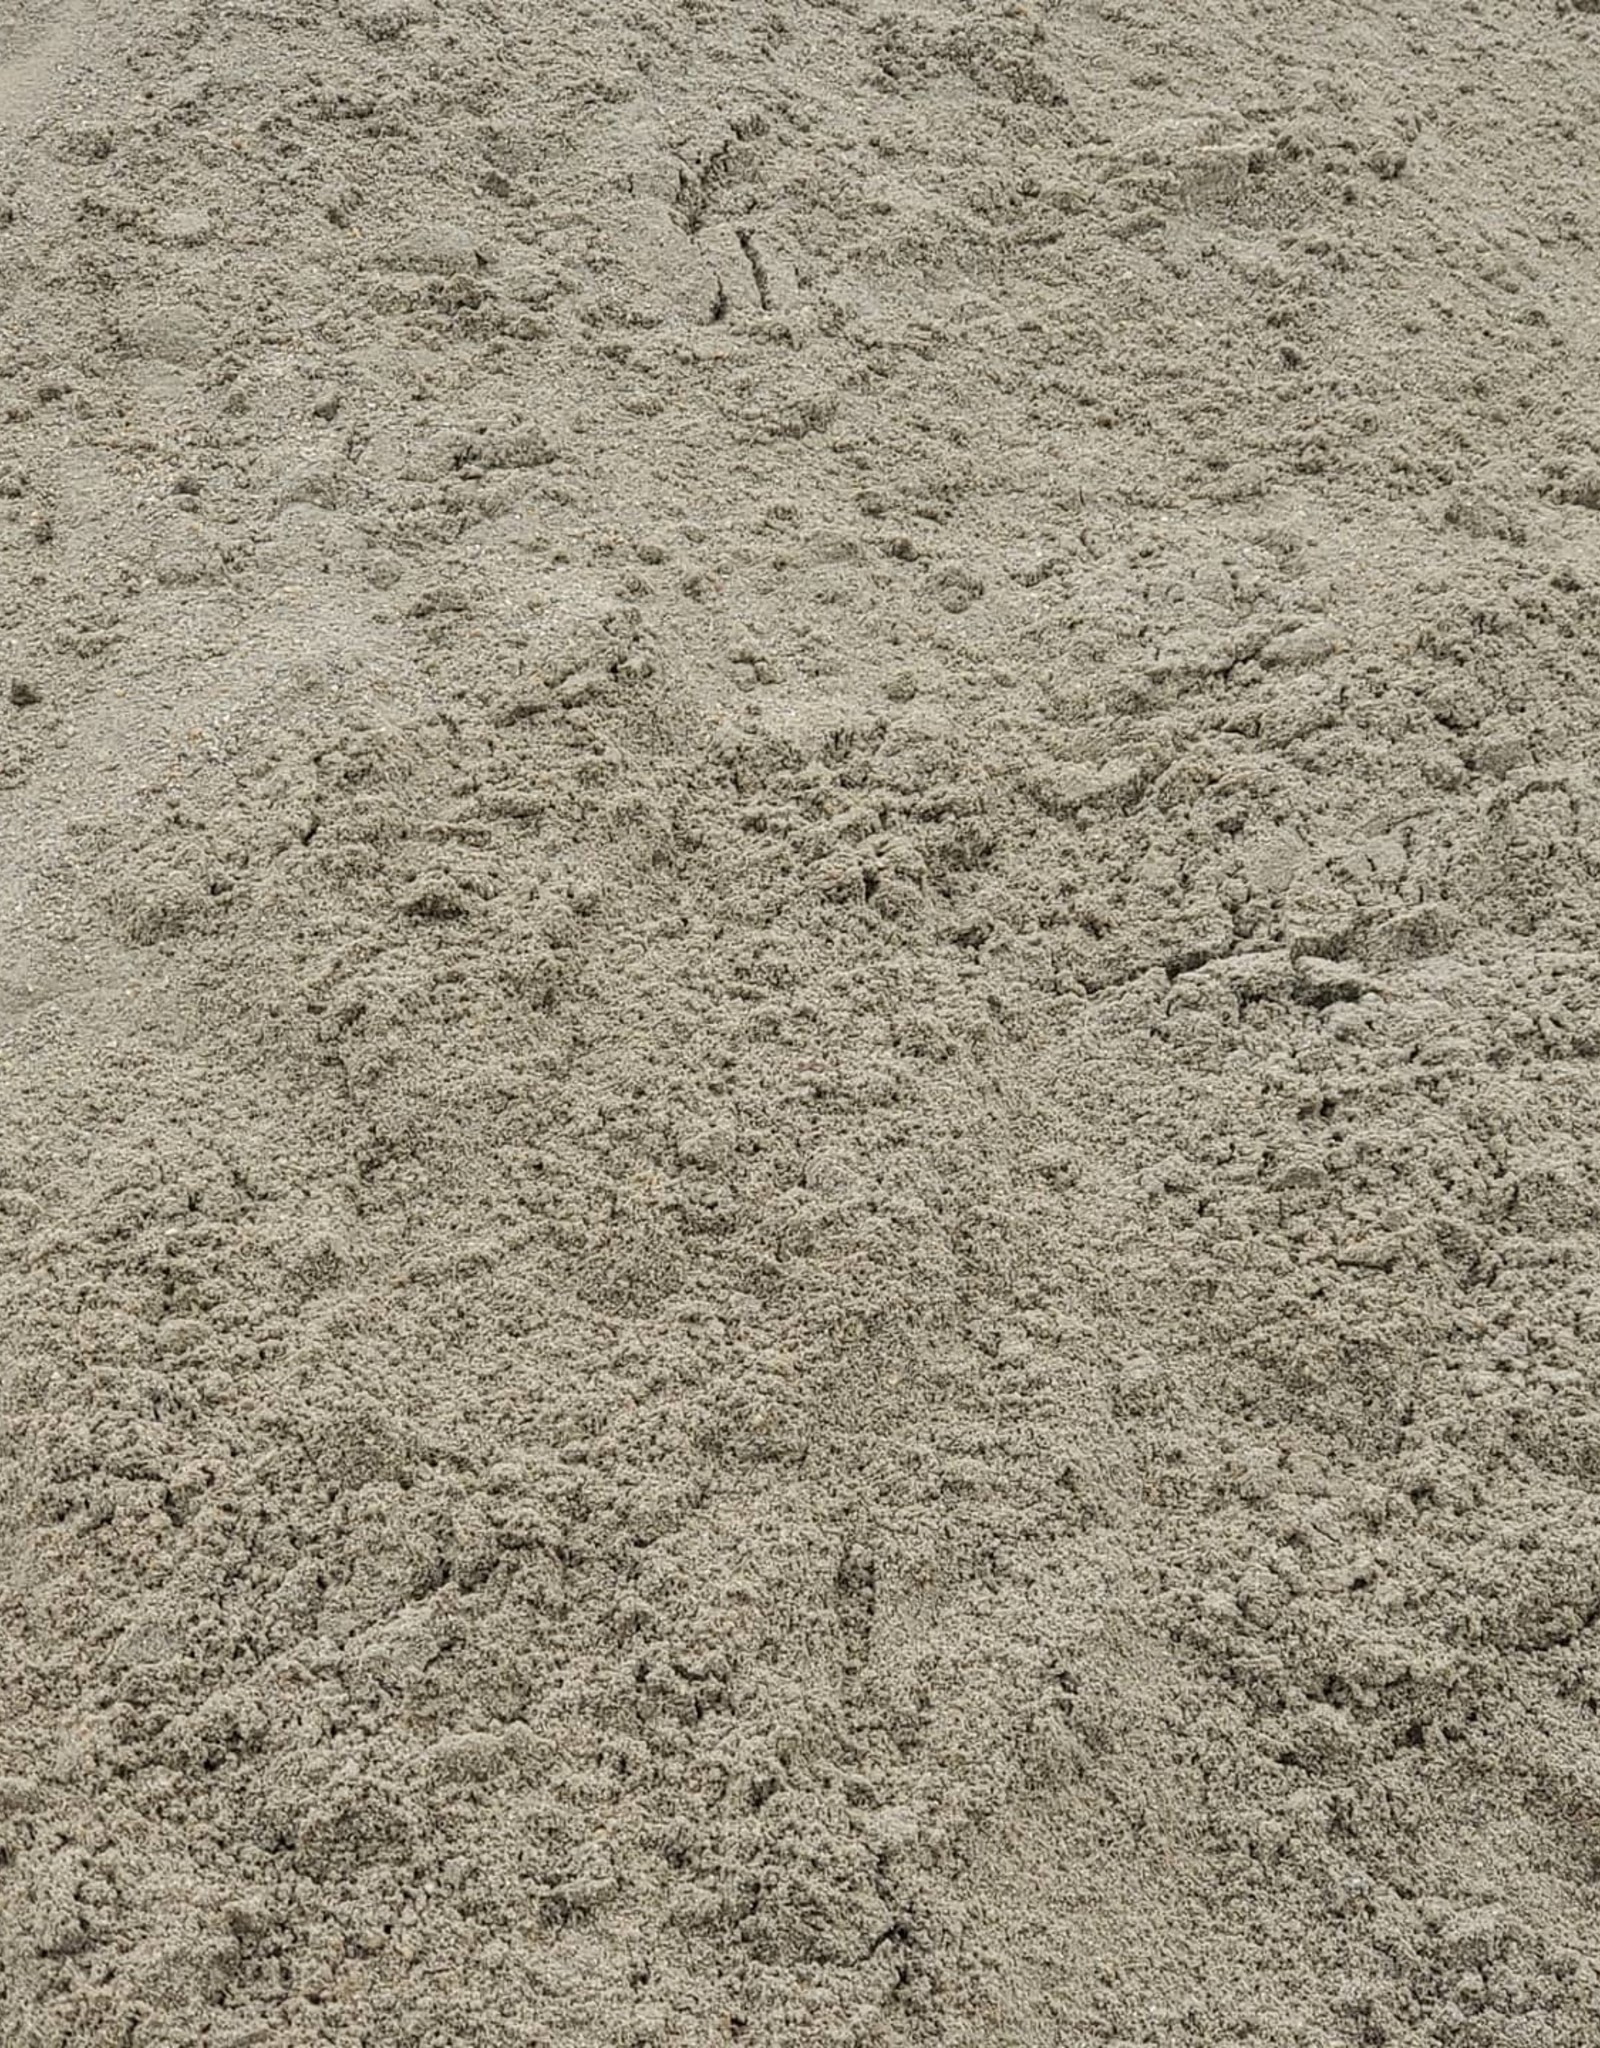 1 Yard Concrete Sand